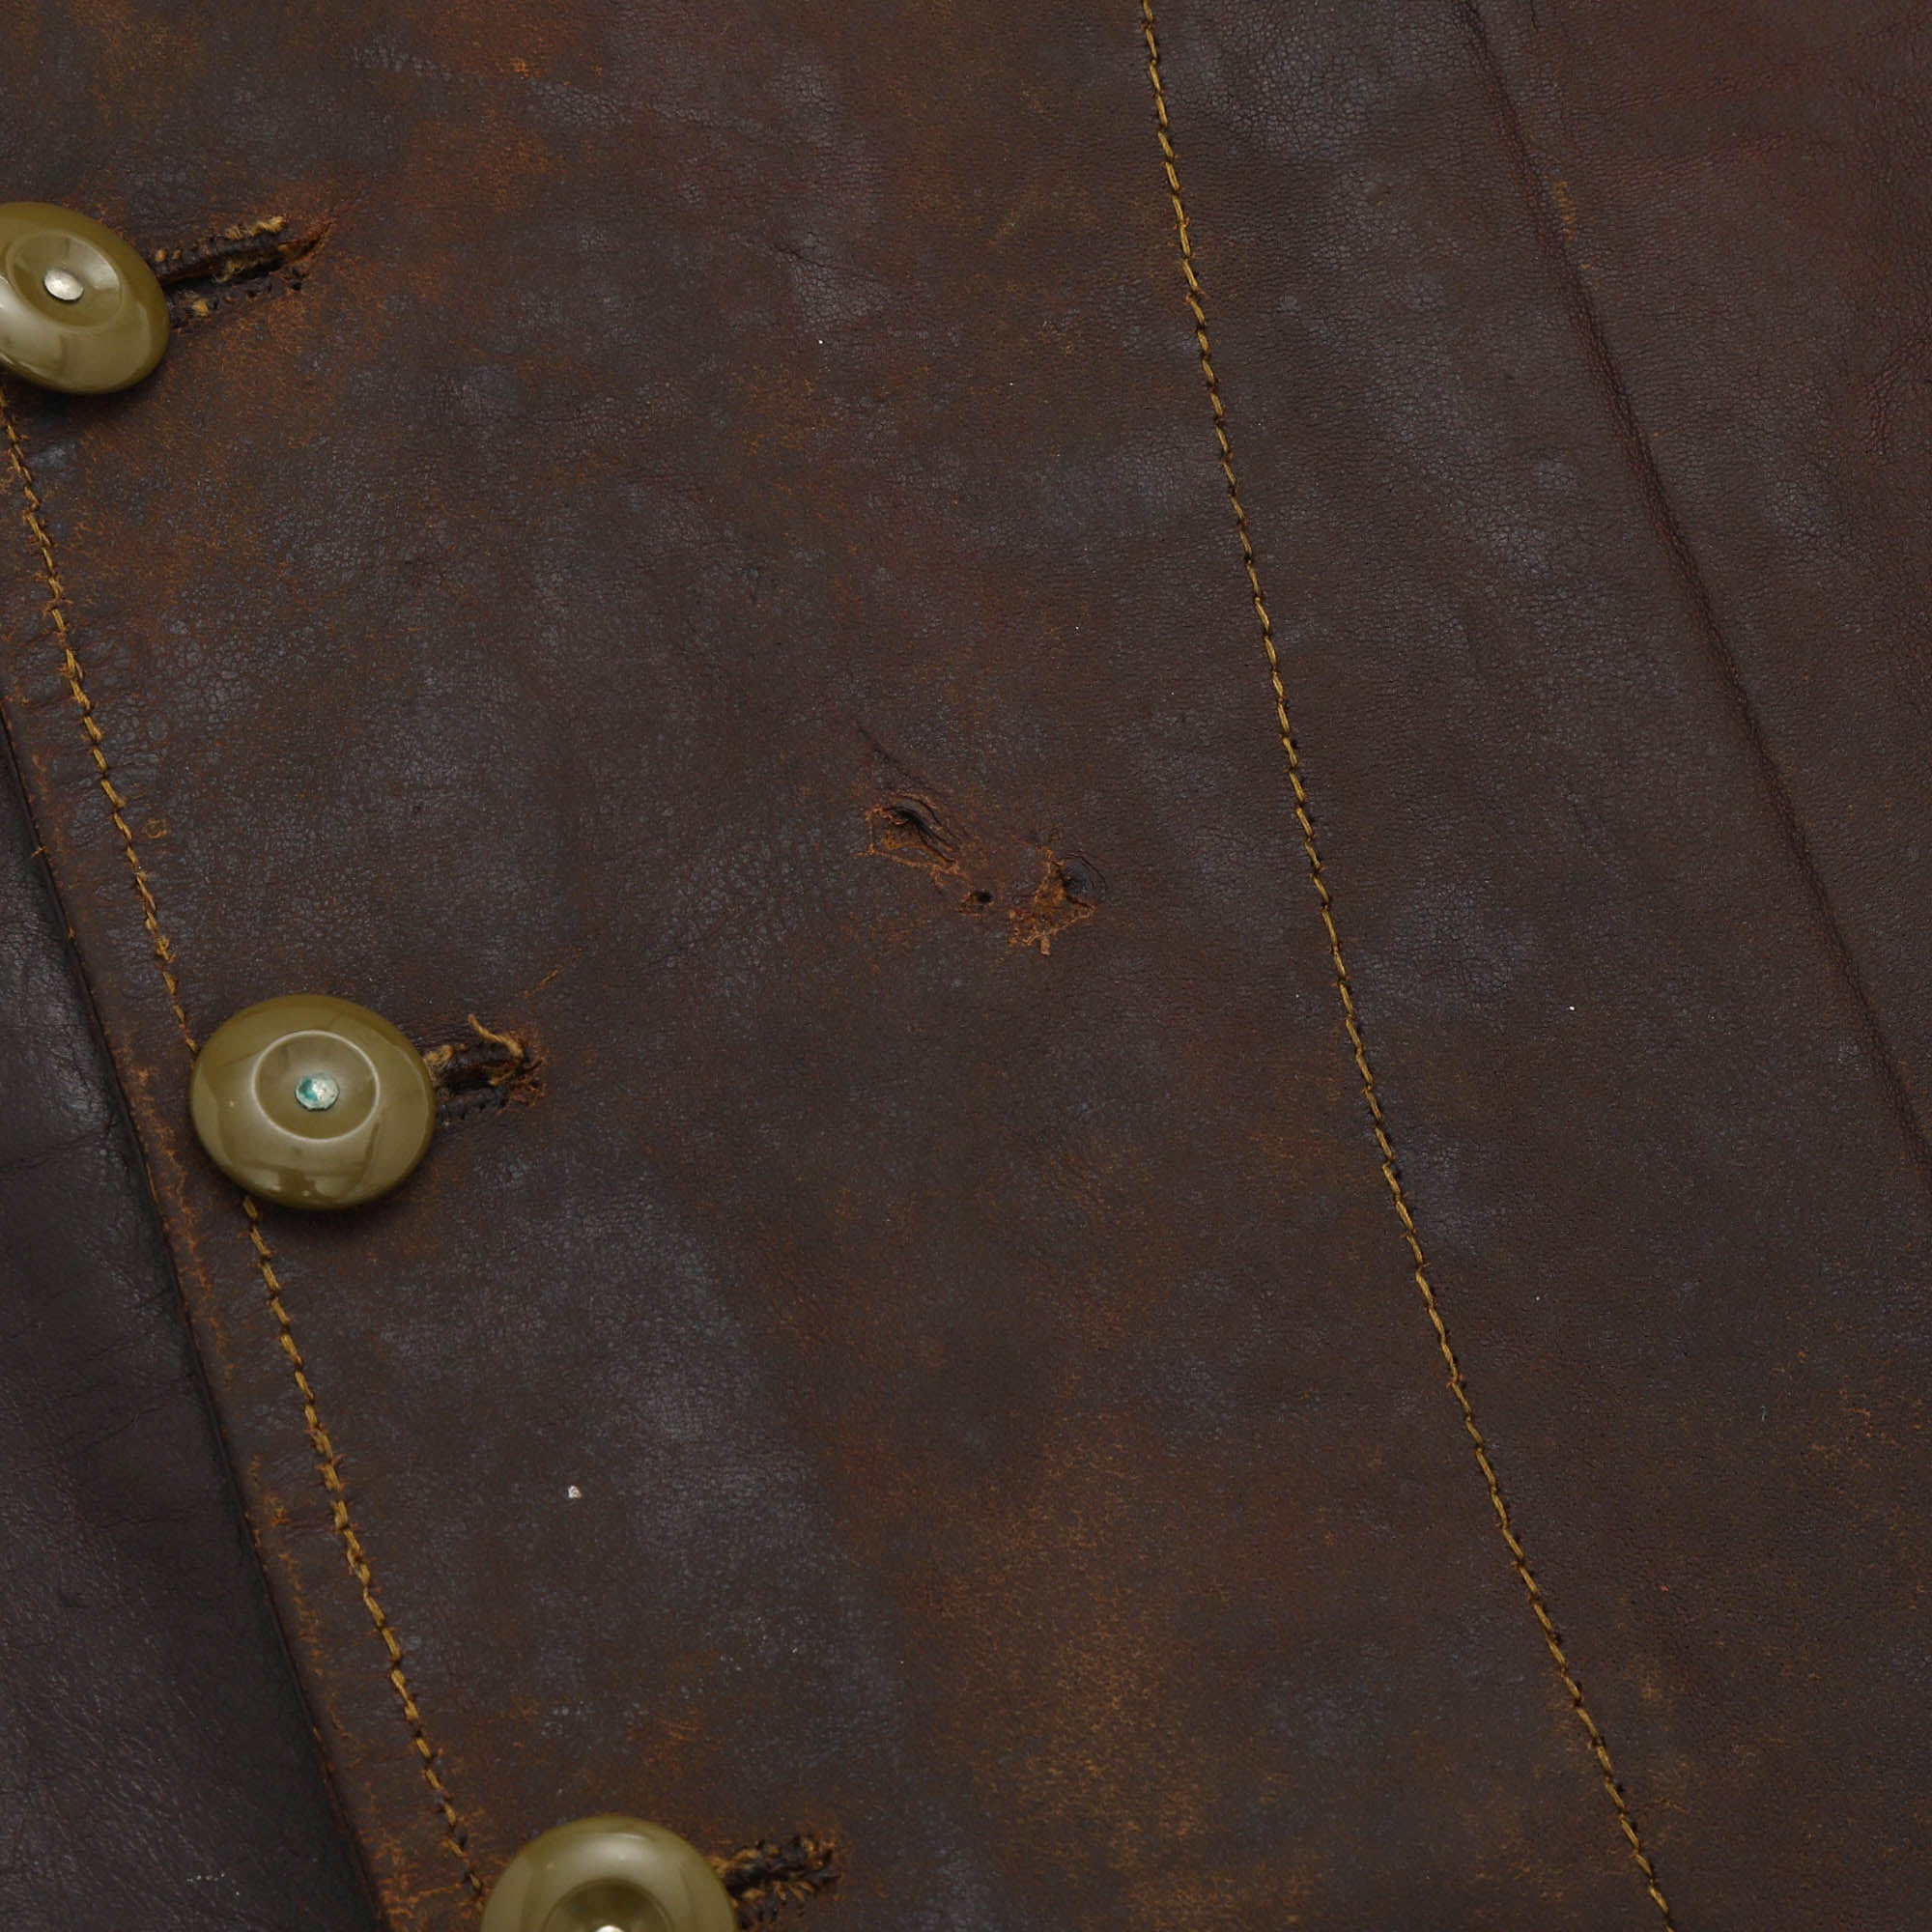 Original WW2 Leather Vest